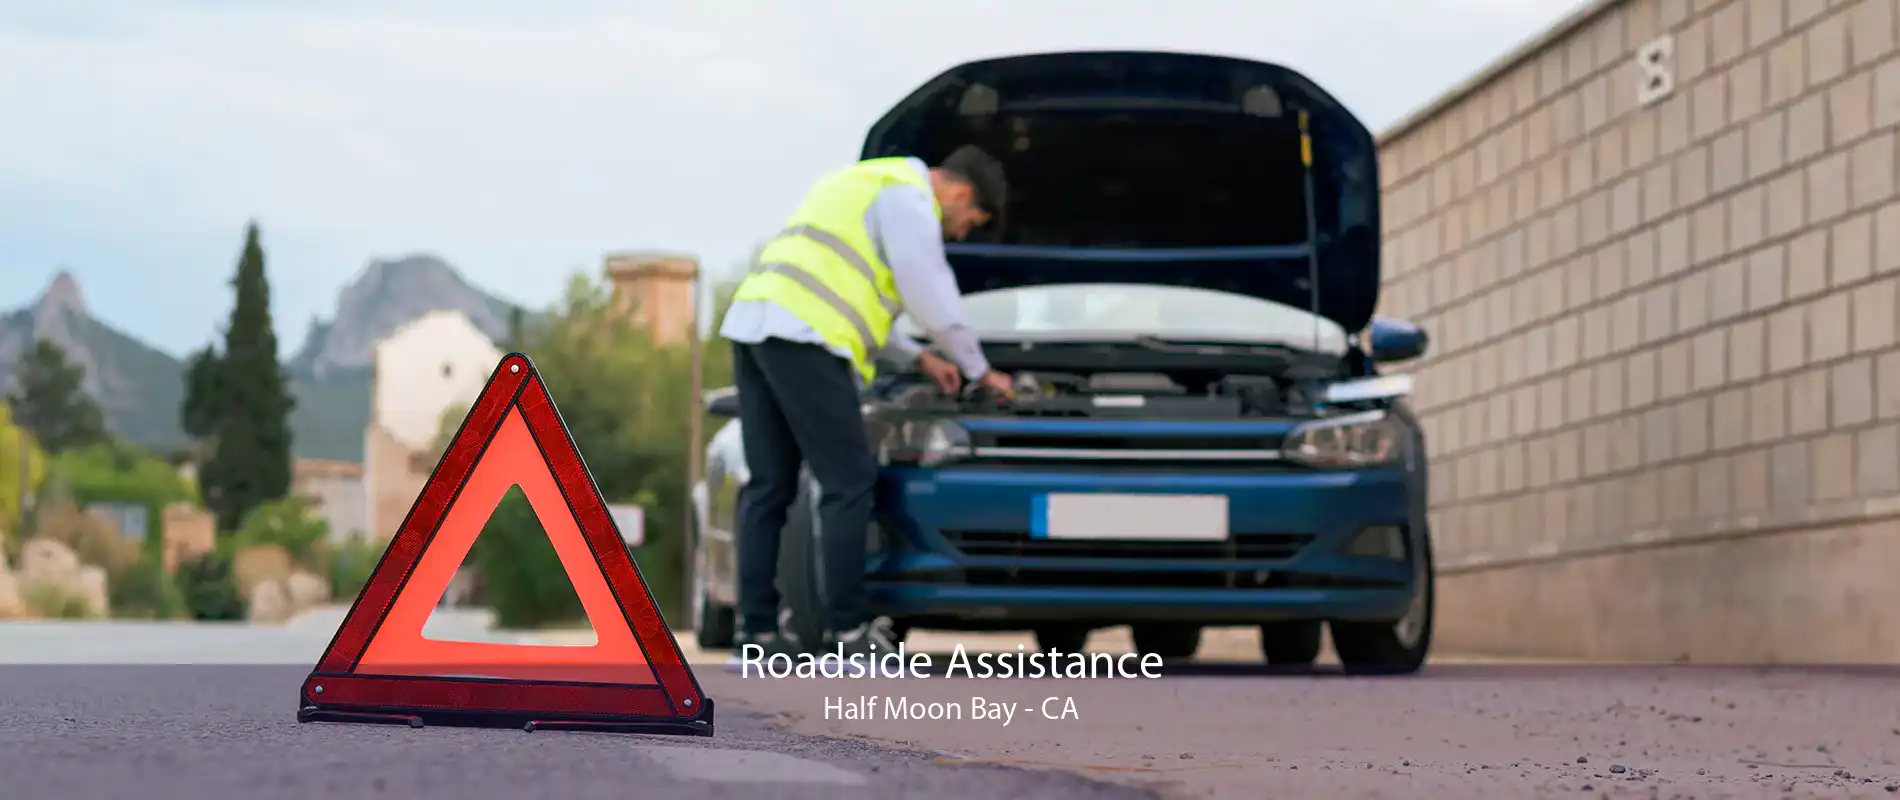 Roadside Assistance Half Moon Bay - CA